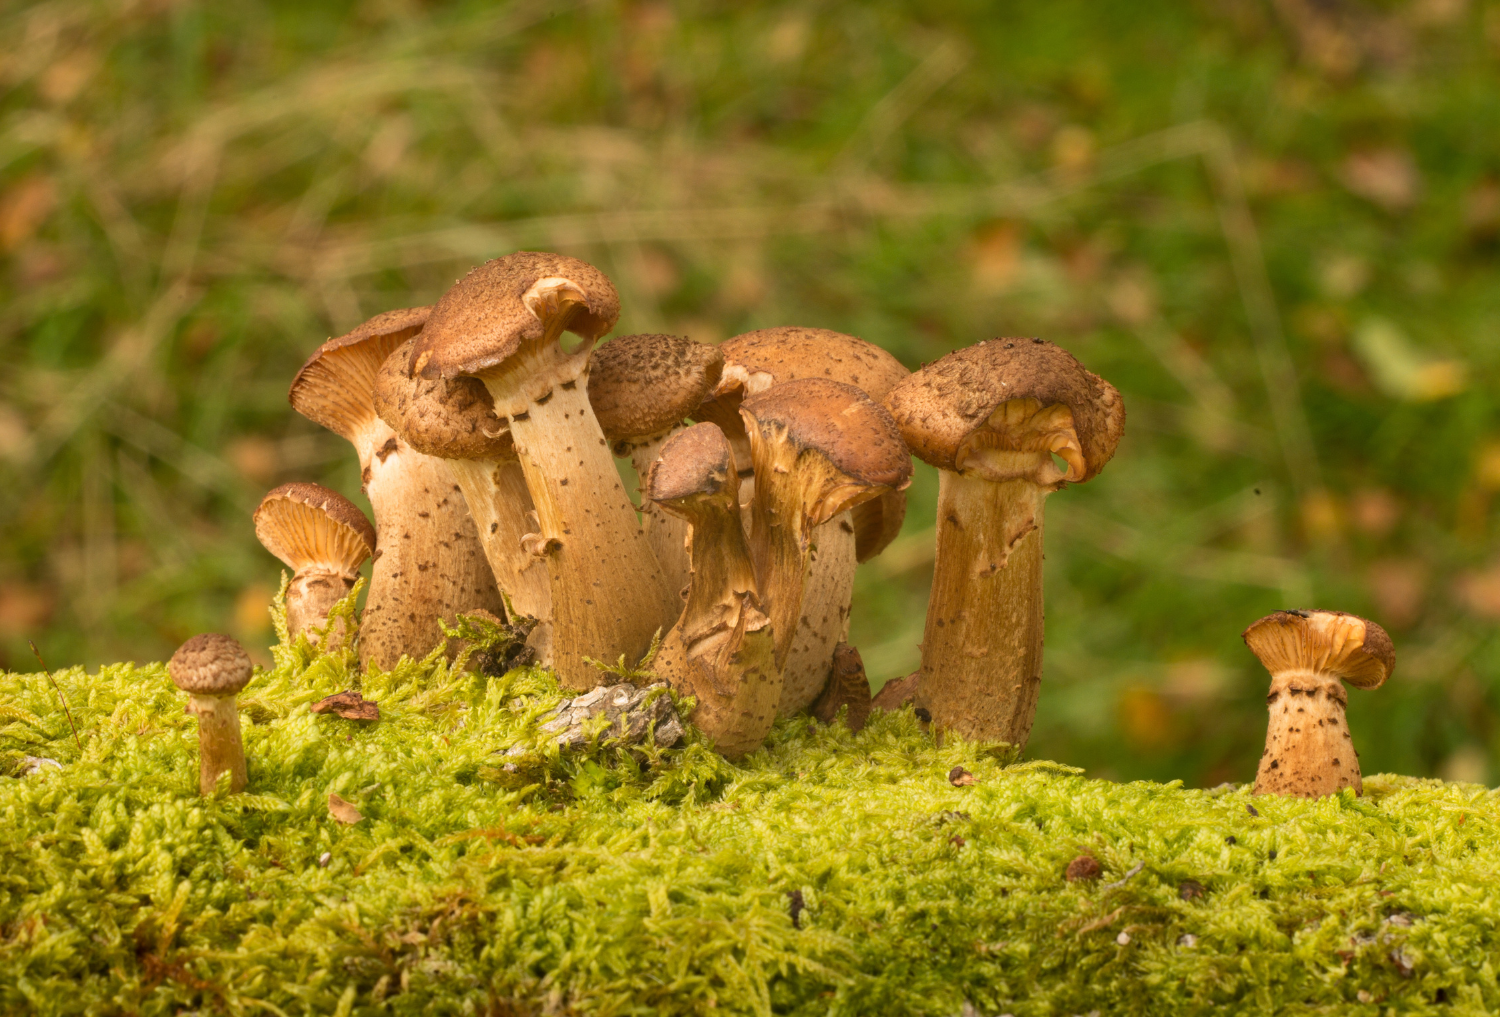 A close up of honey fungus on a mossy log